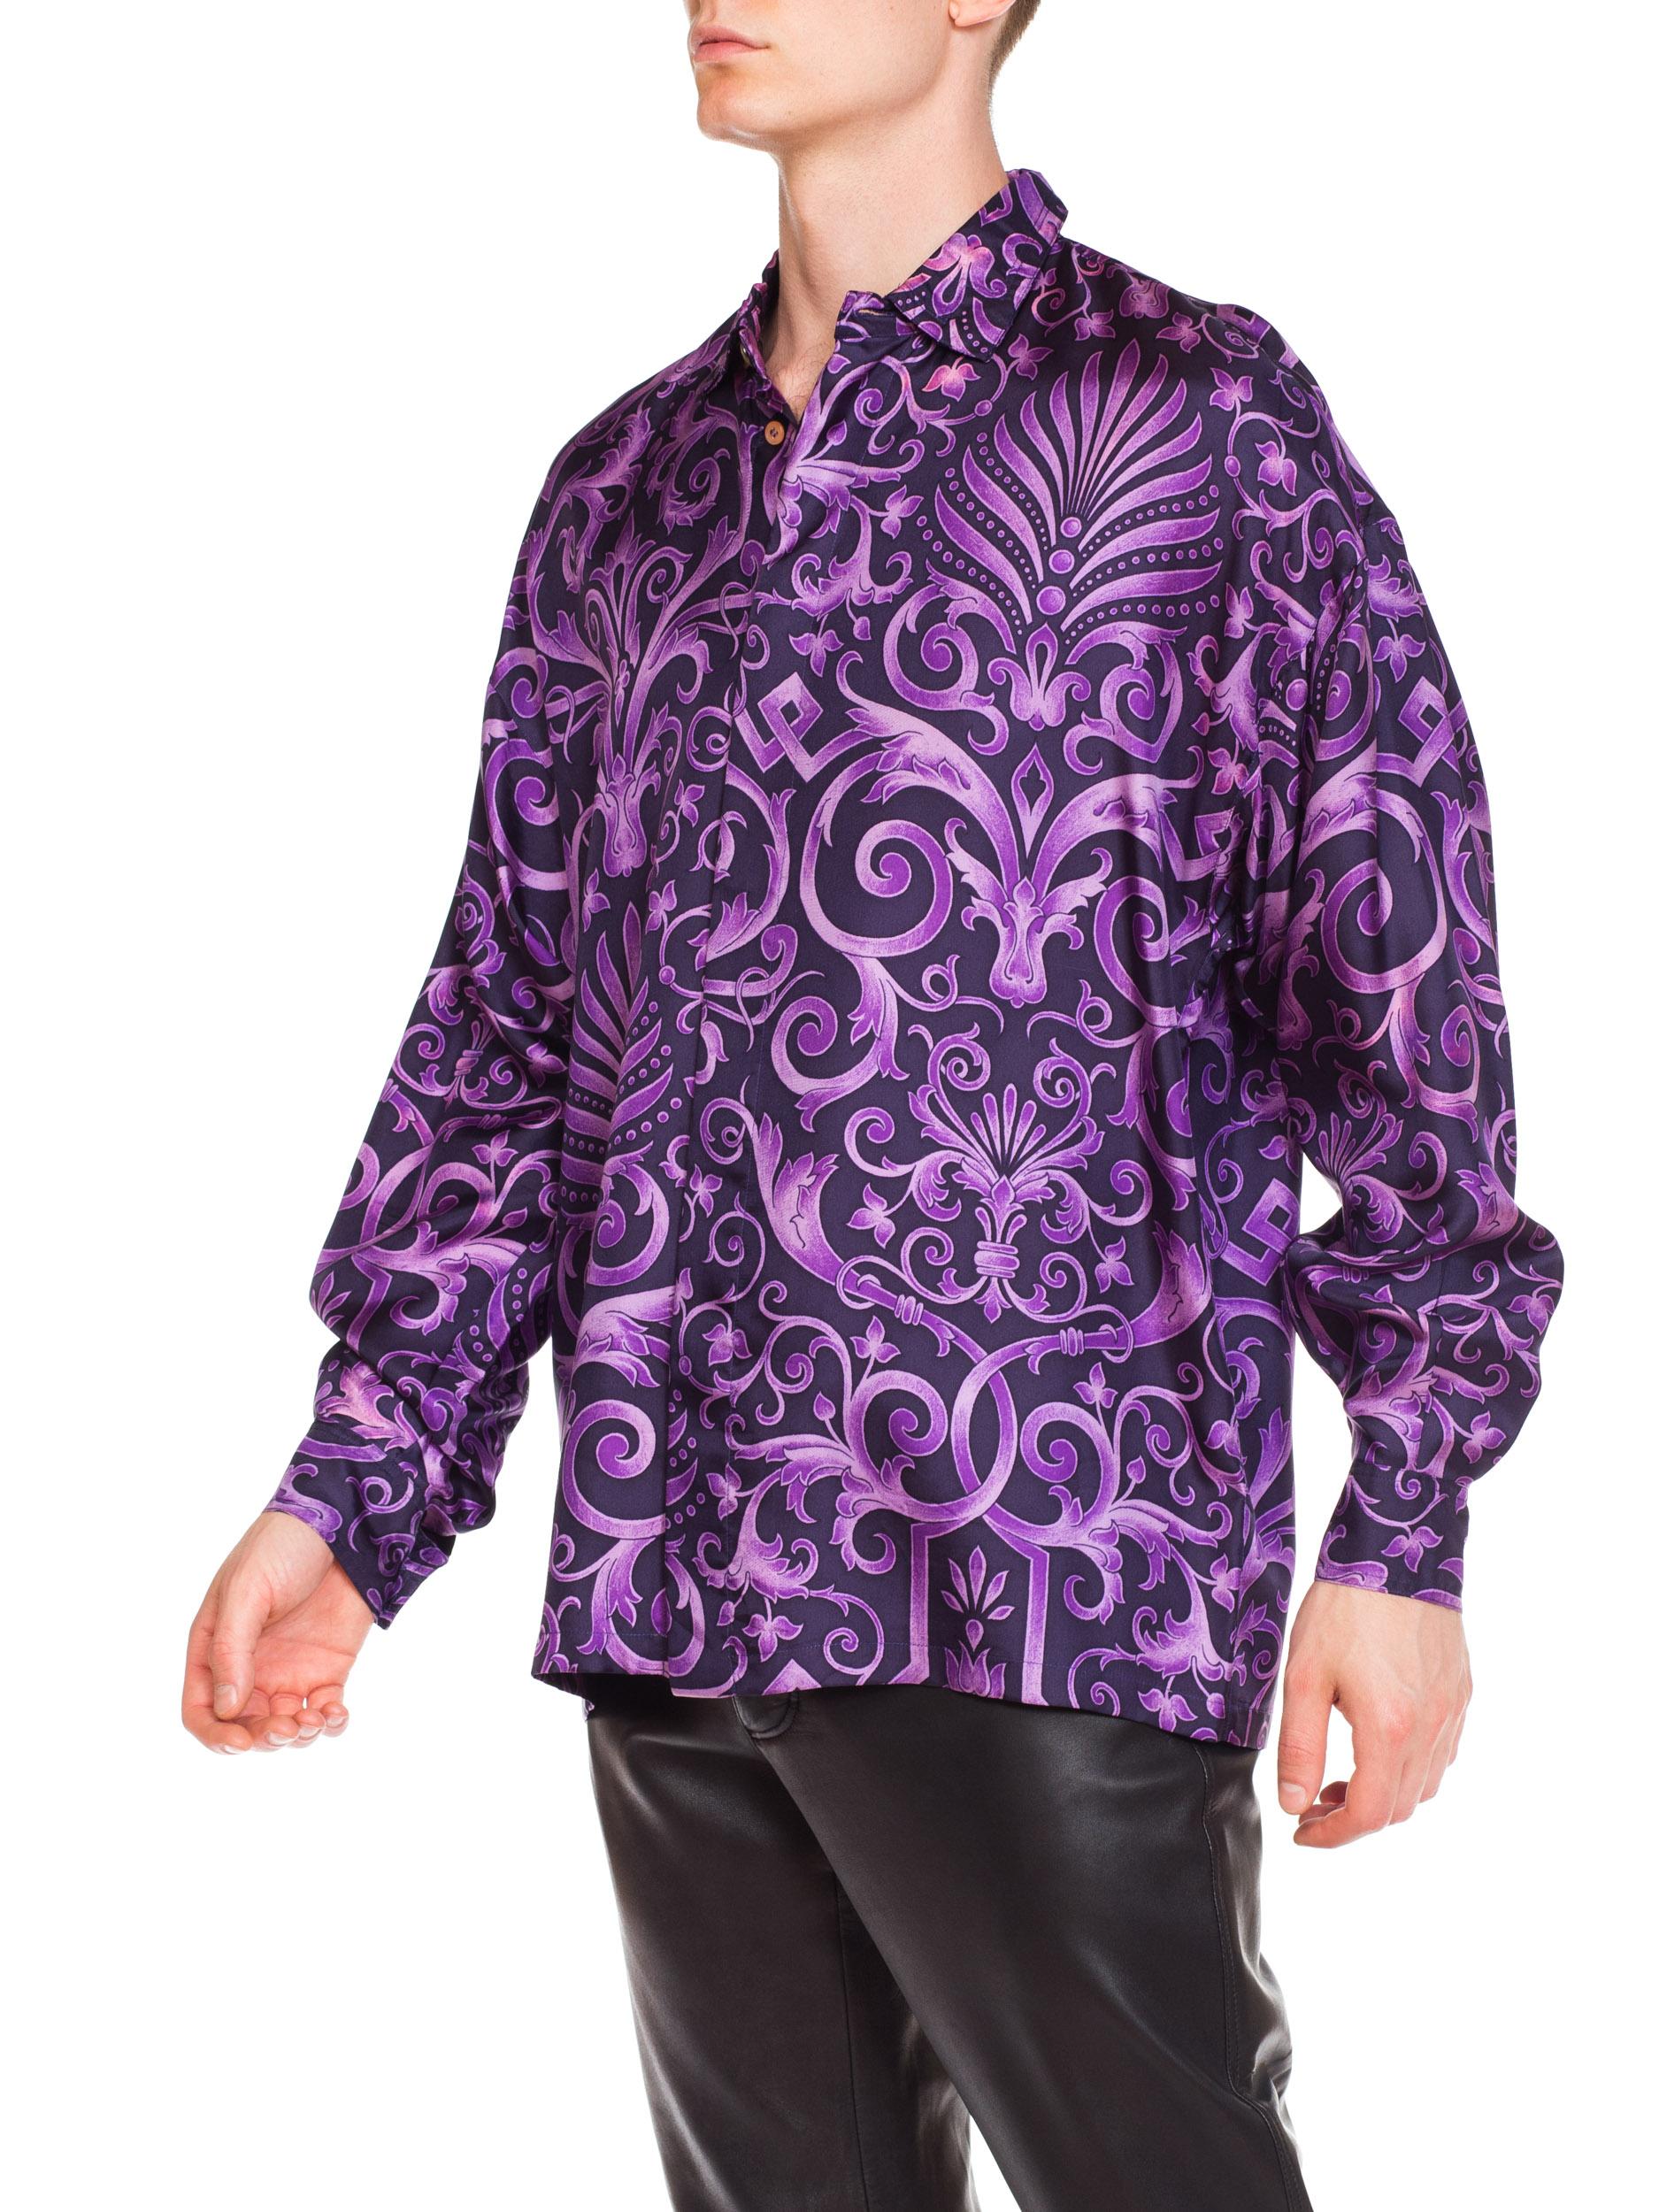 1990s Men's Gianni Versace Purple Baroque Print Silk Shirt From 1990-1992